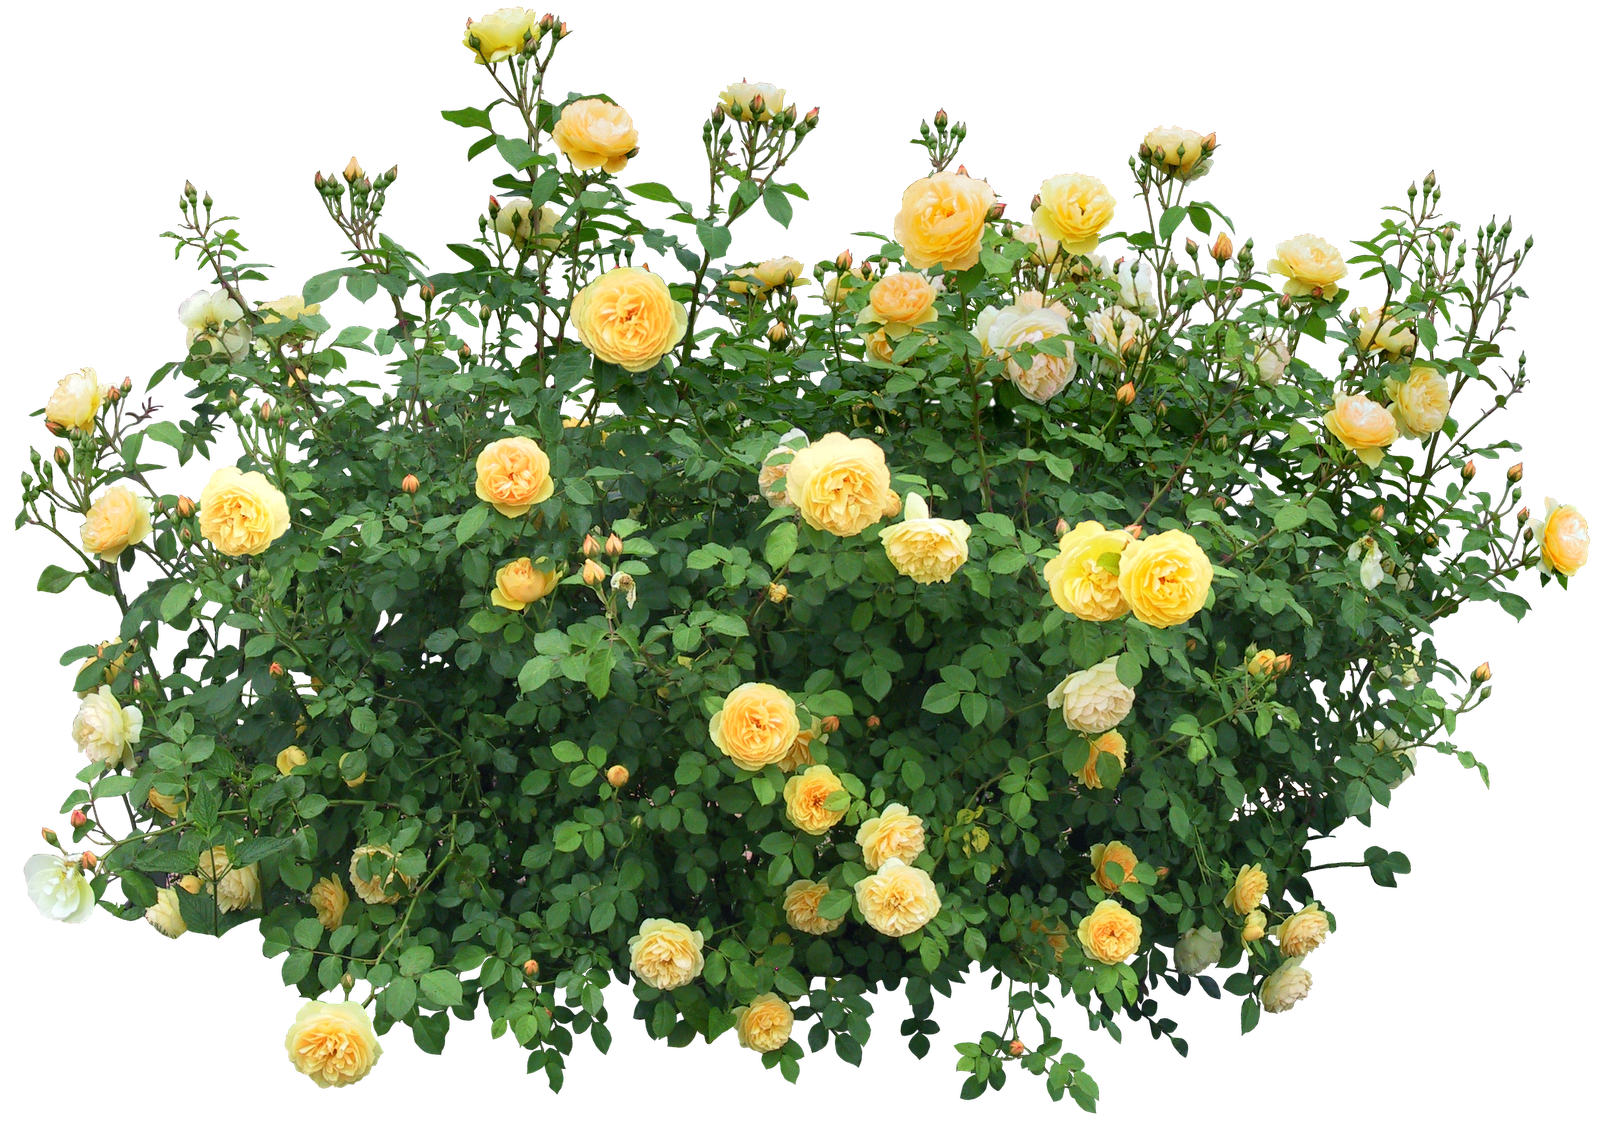 Cespuglio di rose gialle